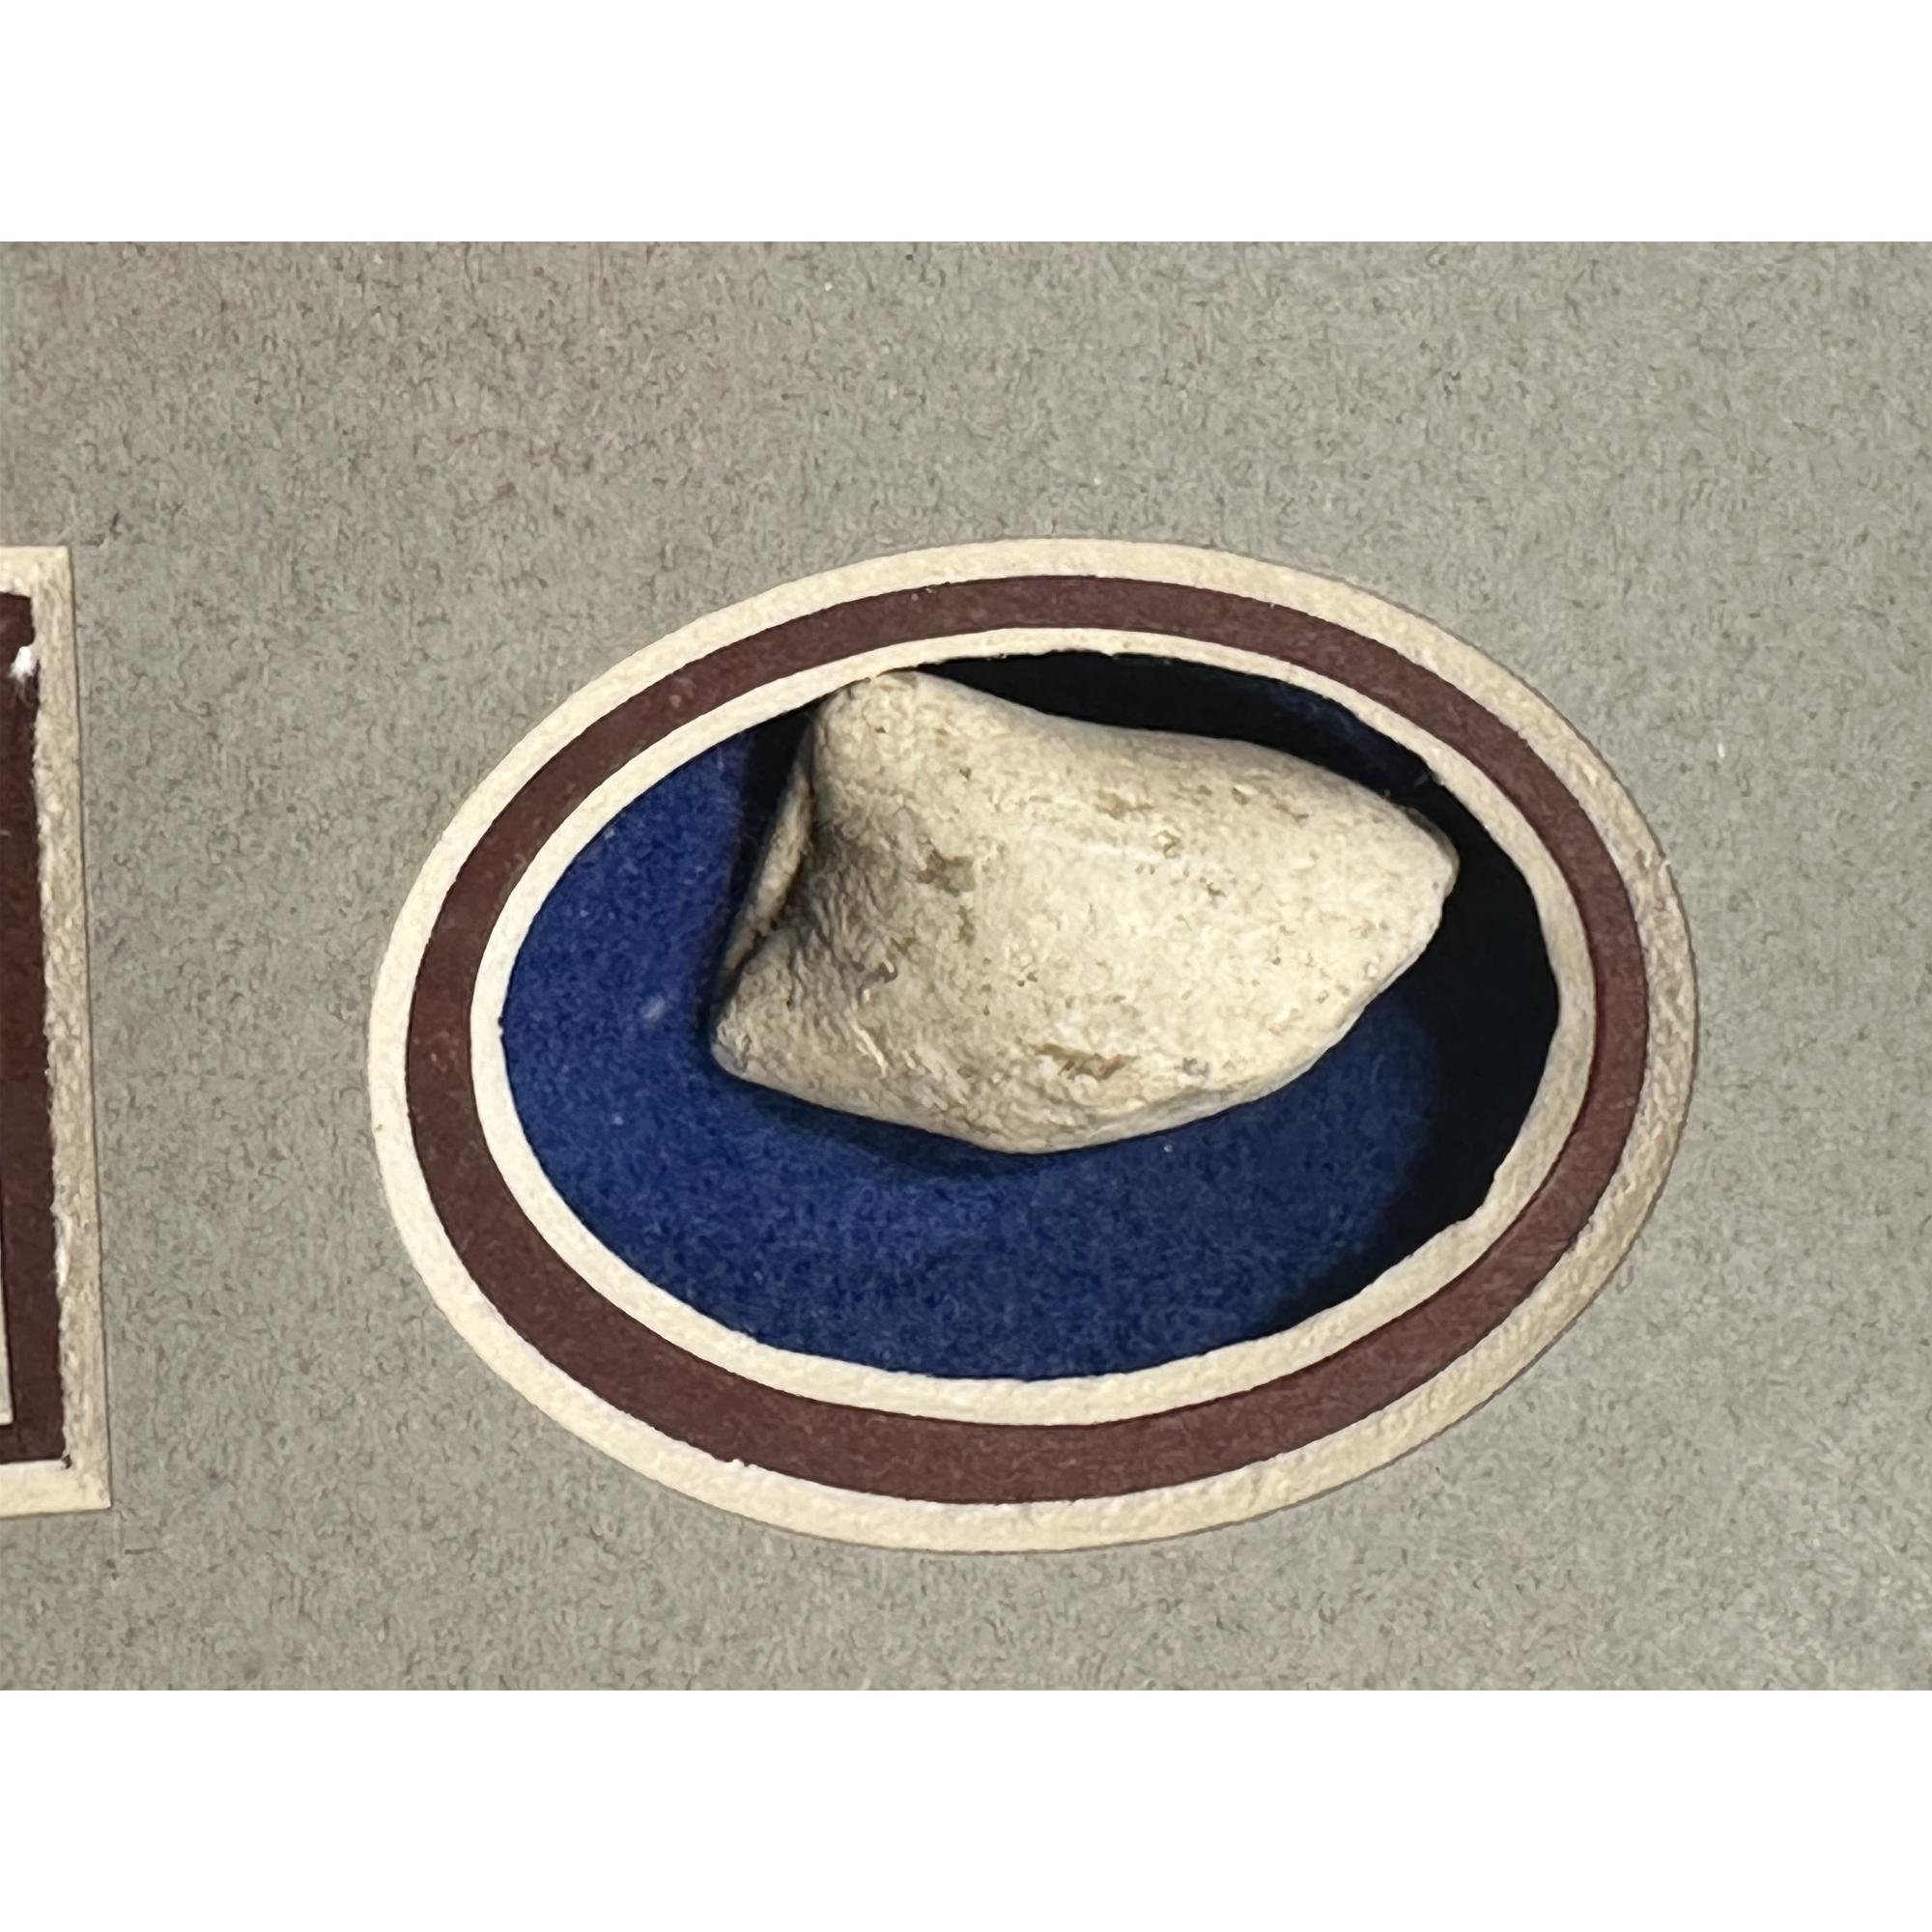 Civil War artifact collection, Premium relics, 12 Prehistoric Online